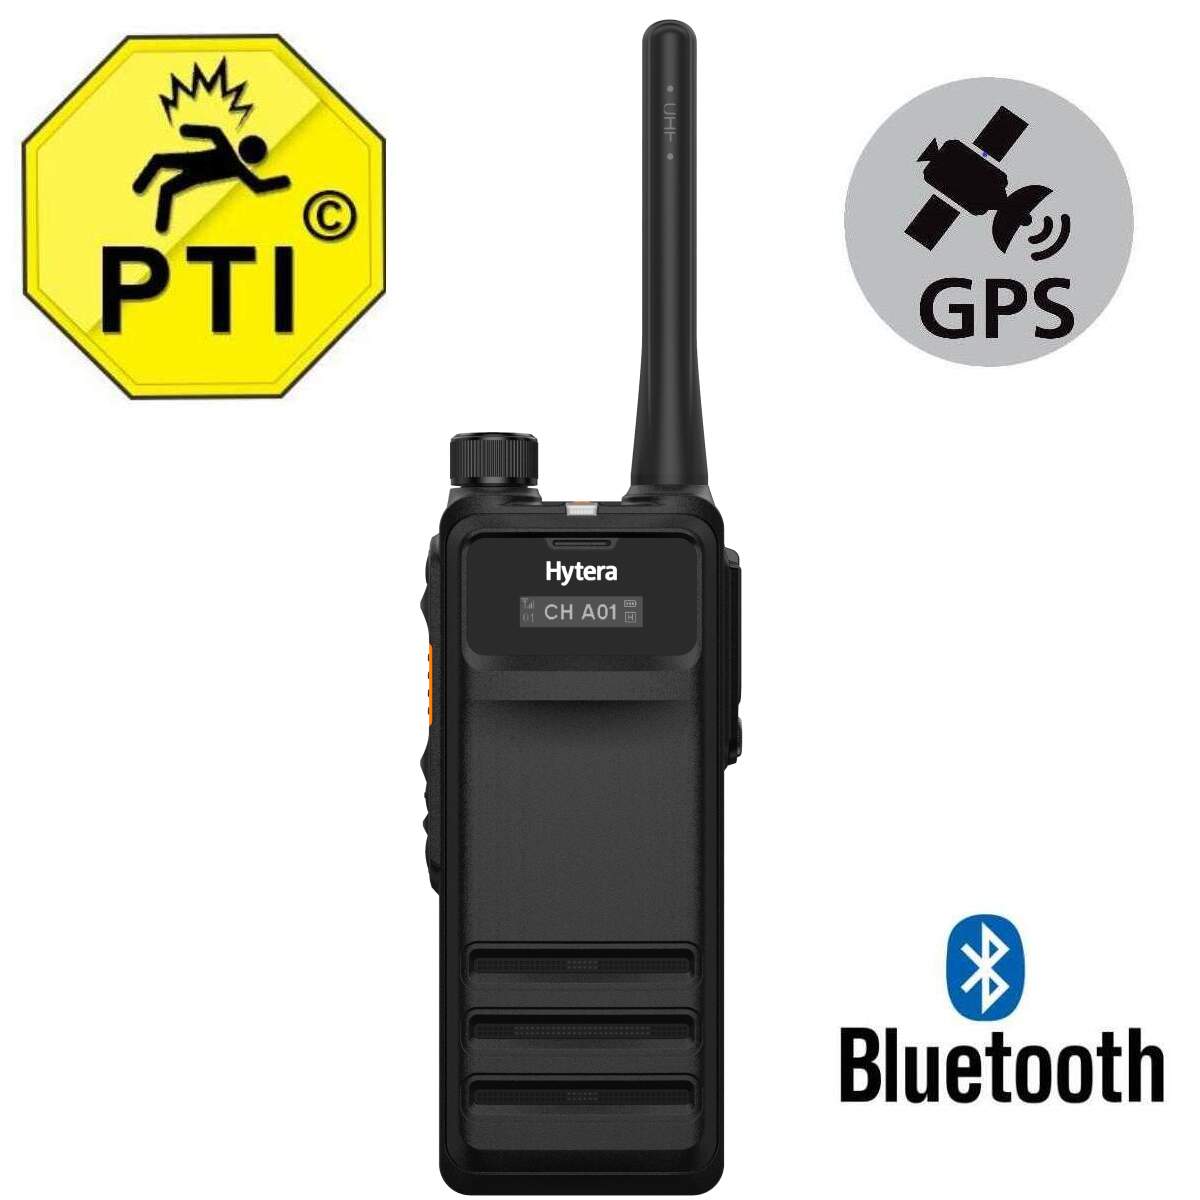 Hytera HP705 UHF - PTI Bluetooth GPS image